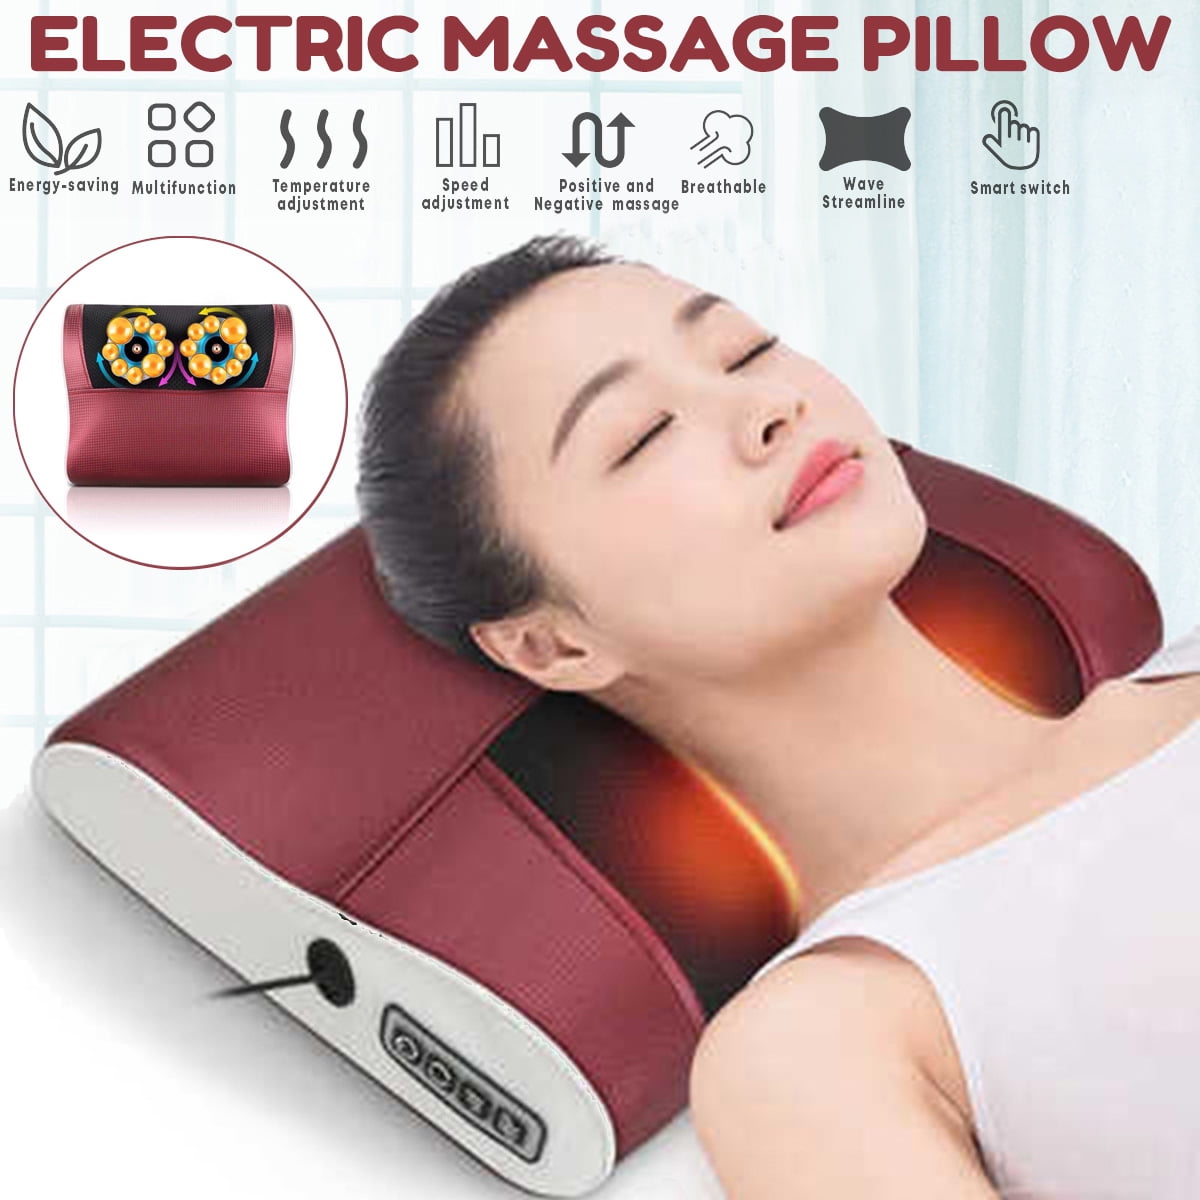 massage pillow action